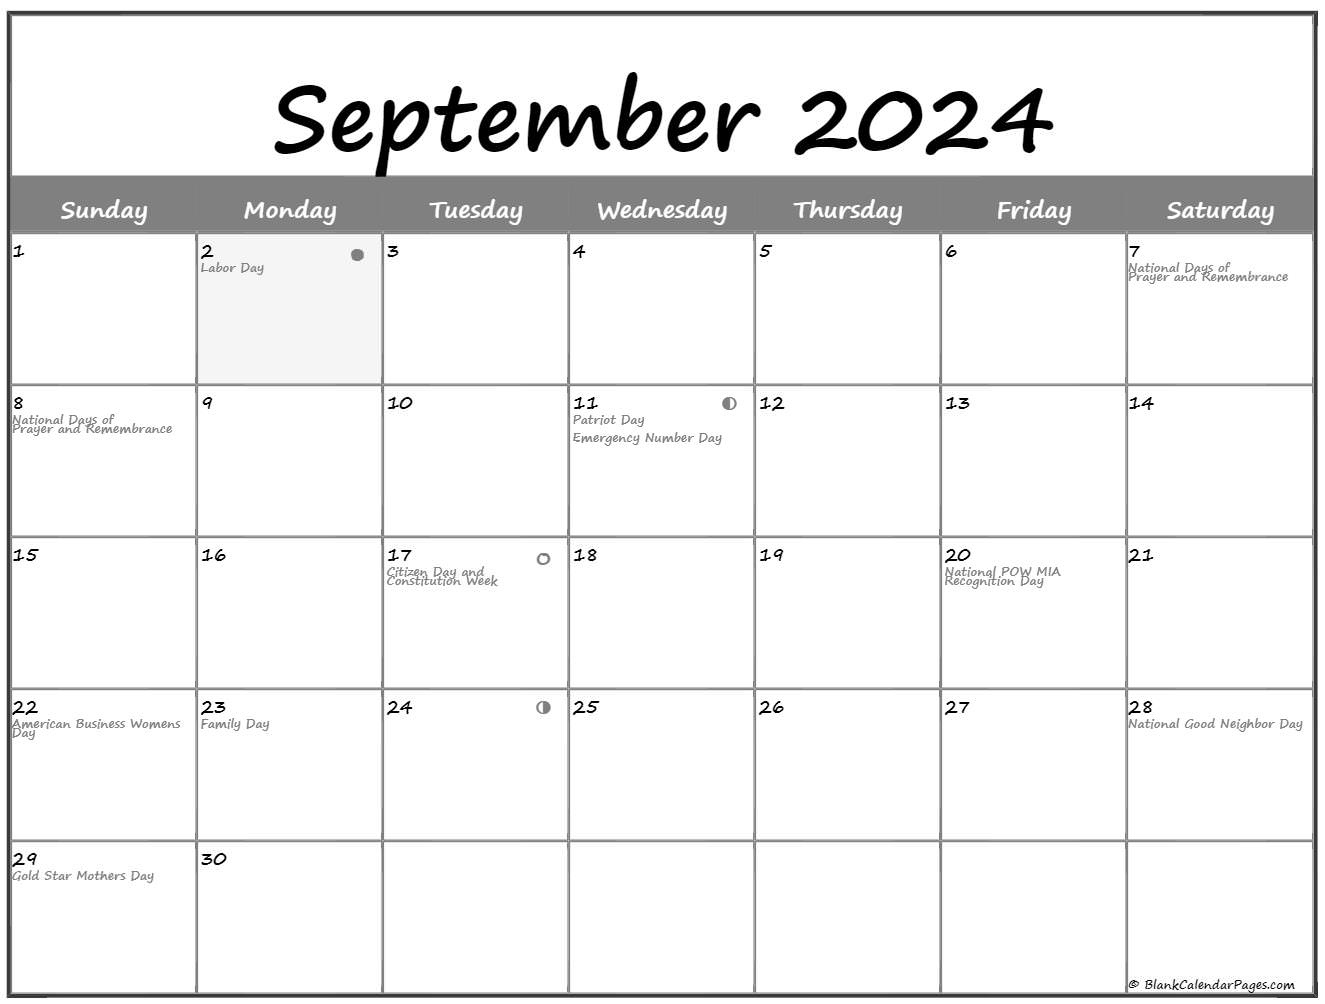 Moon Calendar September 2022 September 2022 Lunar Calendar | Moon Phase Calendar